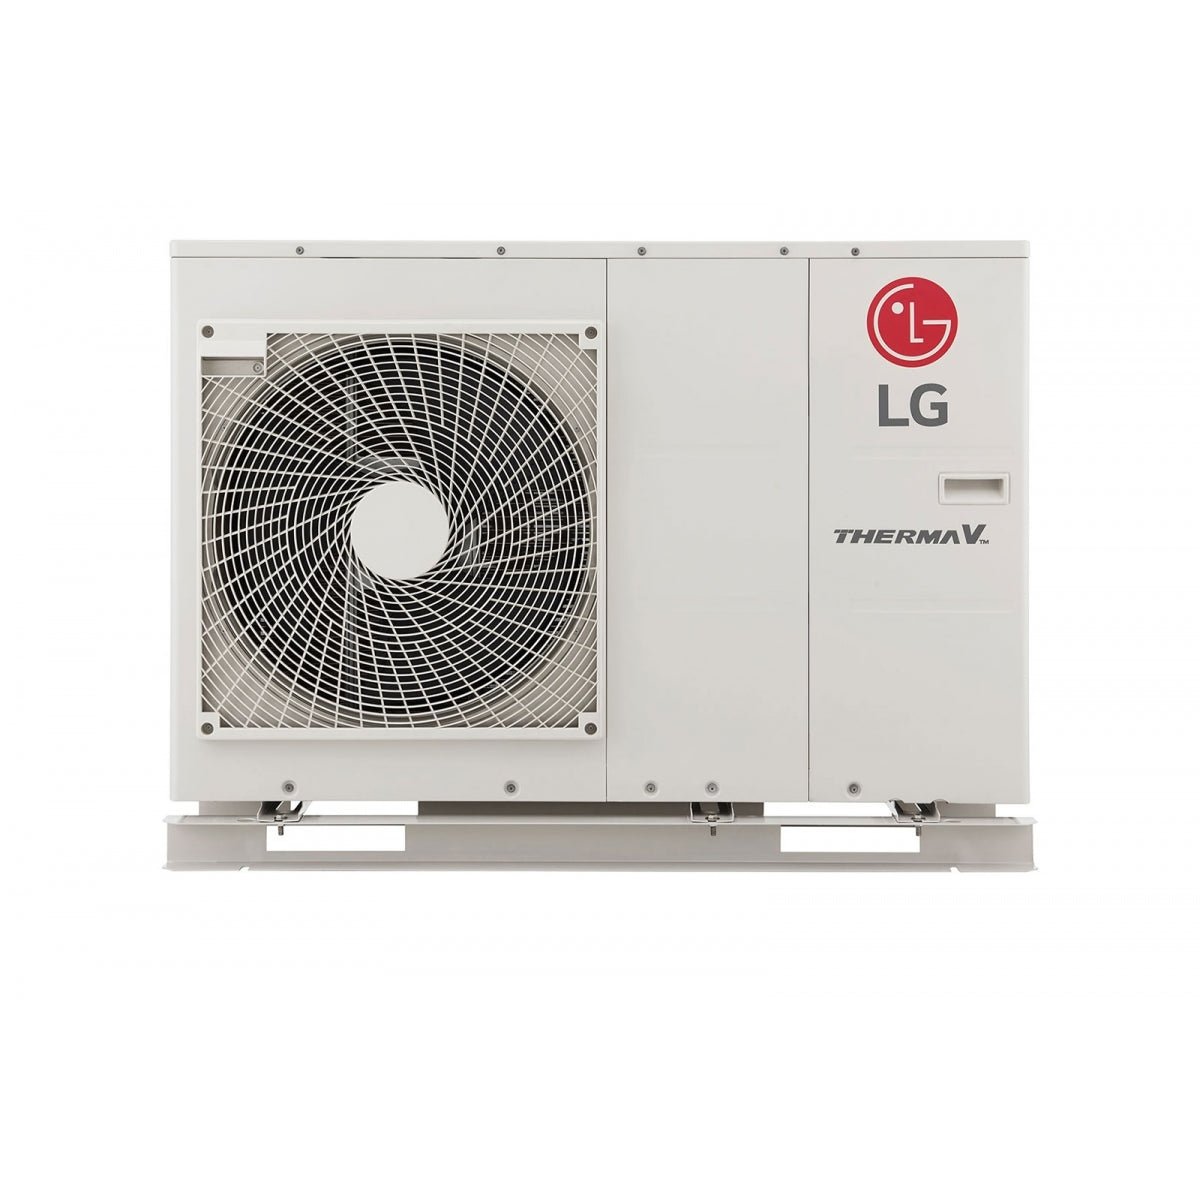 LG 9kW Therma V Monoblock Air to Water Heat Pump-KlimaTime